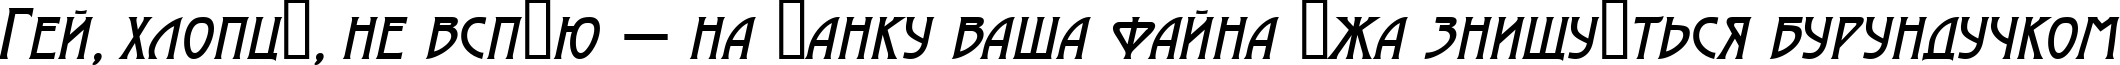 Пример написания шрифтом a_ModernoCaps Italic текста на украинском